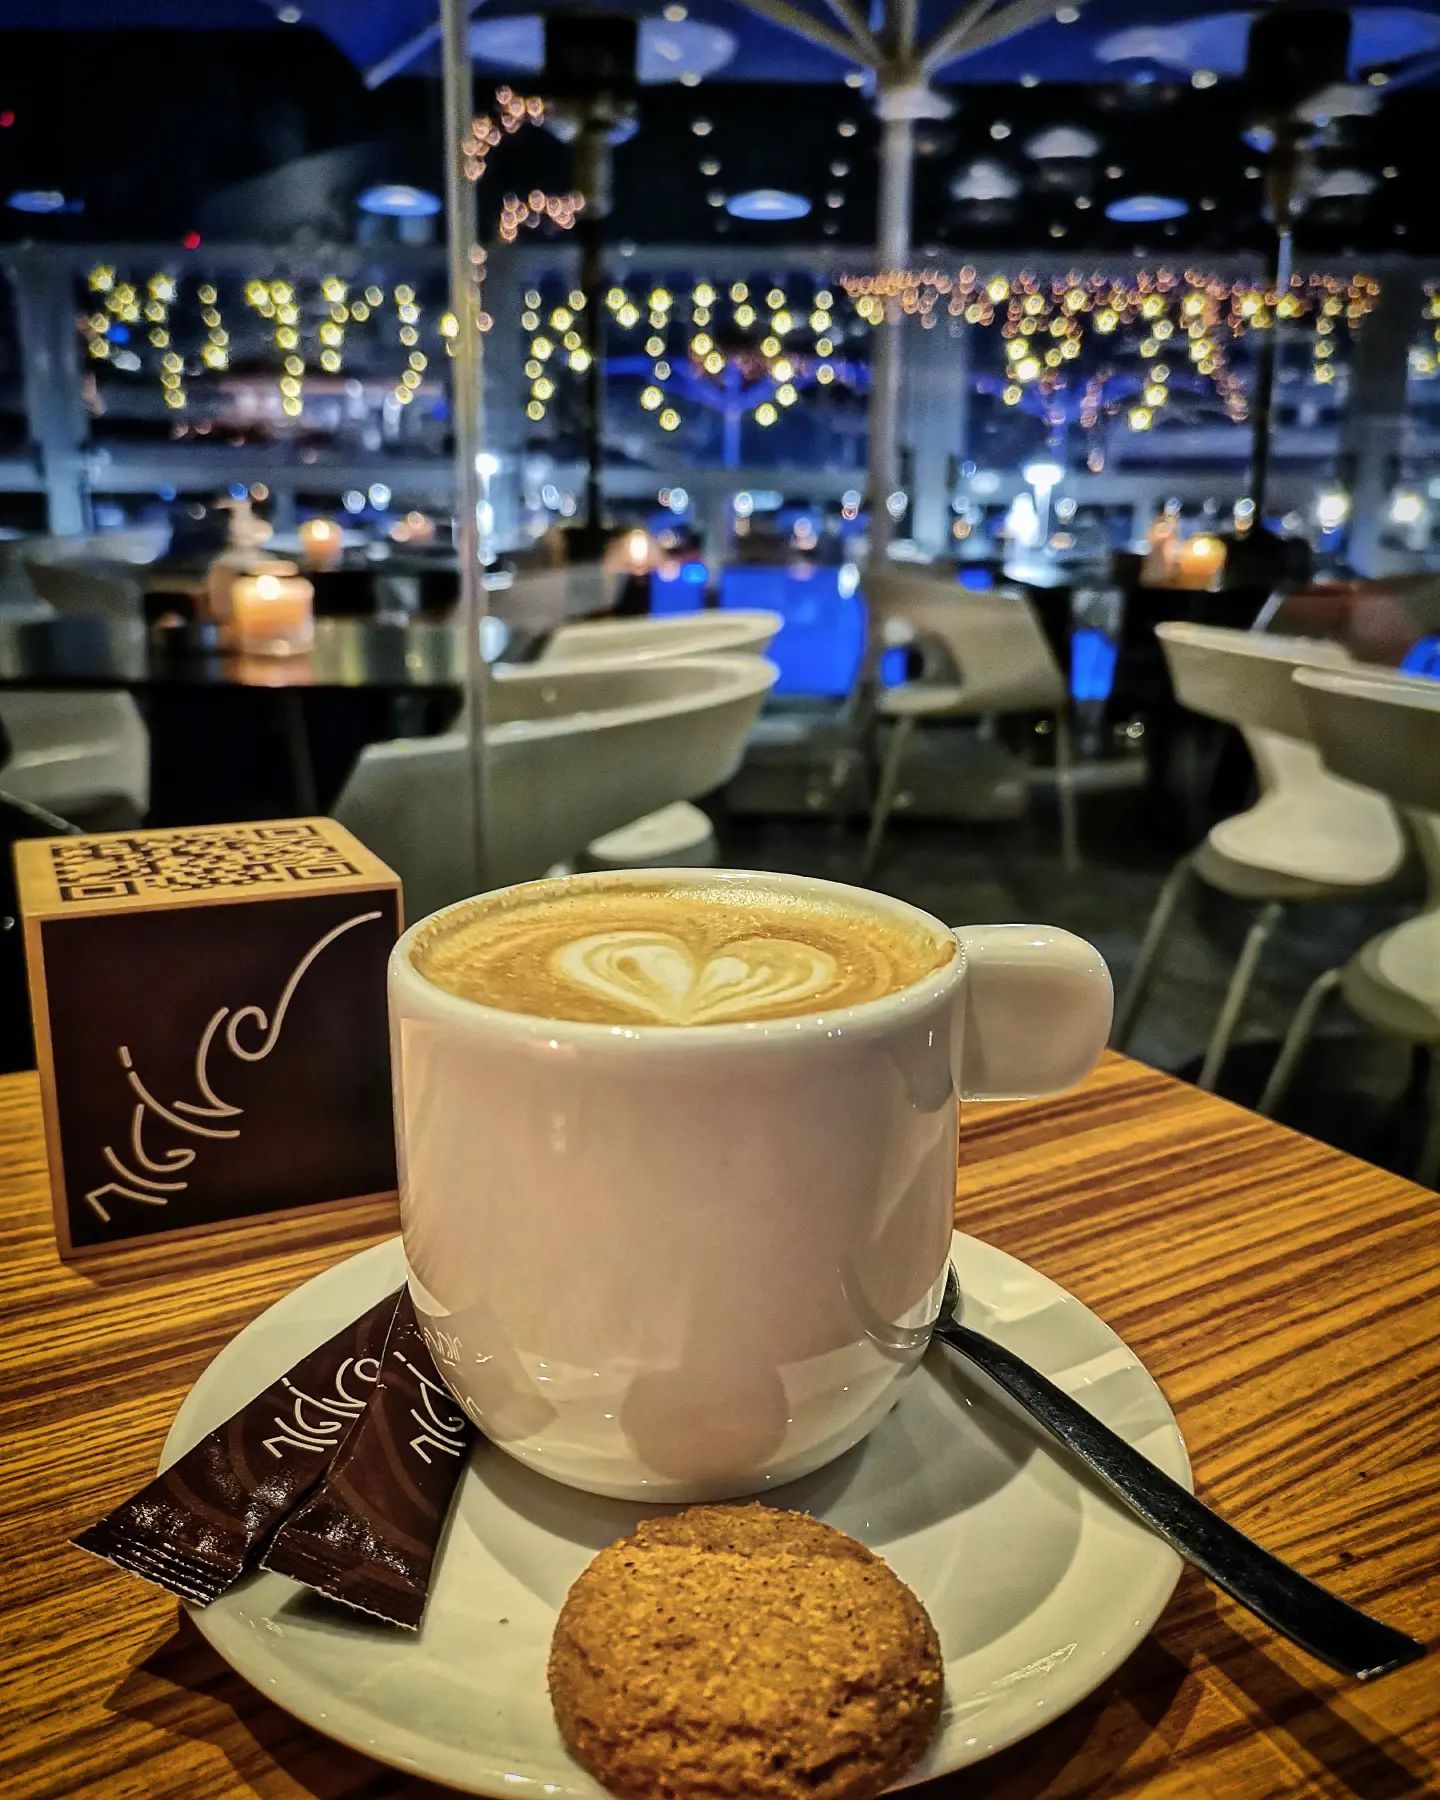 Pisina ,Marina Zeas ... time for hot cappuccino

#coffeetime #coffee #coffeelover #coffeeaddict #coffeeshop #cafe #coffeelovers #coffeegram #espresso #coffeeholic #coffeebreak #barista #instacoffee #latte #coffeelife #caf #latteart #specialtycoffee #love #cappuccino #instagood #food #breakfast #coffeelove #kopi #coffeeoftheday #coffeedaily #coffeeart #goodmorning #caffeine